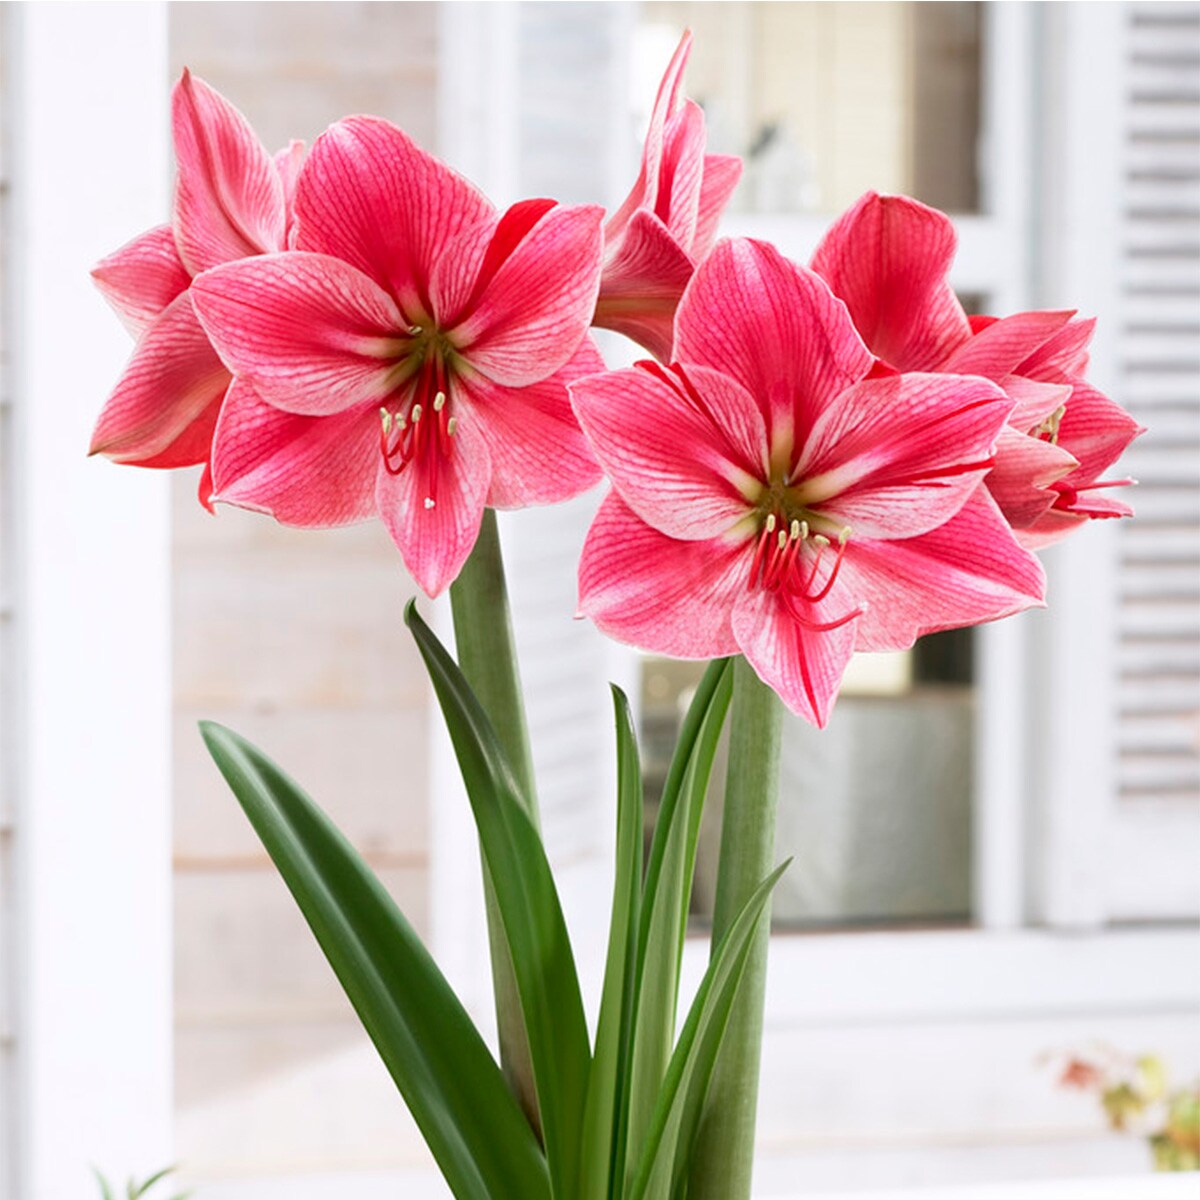 Van Zyverden Pink Amaryllis Gervase Bulbs 1-Pack in the Plant Bulbs ...